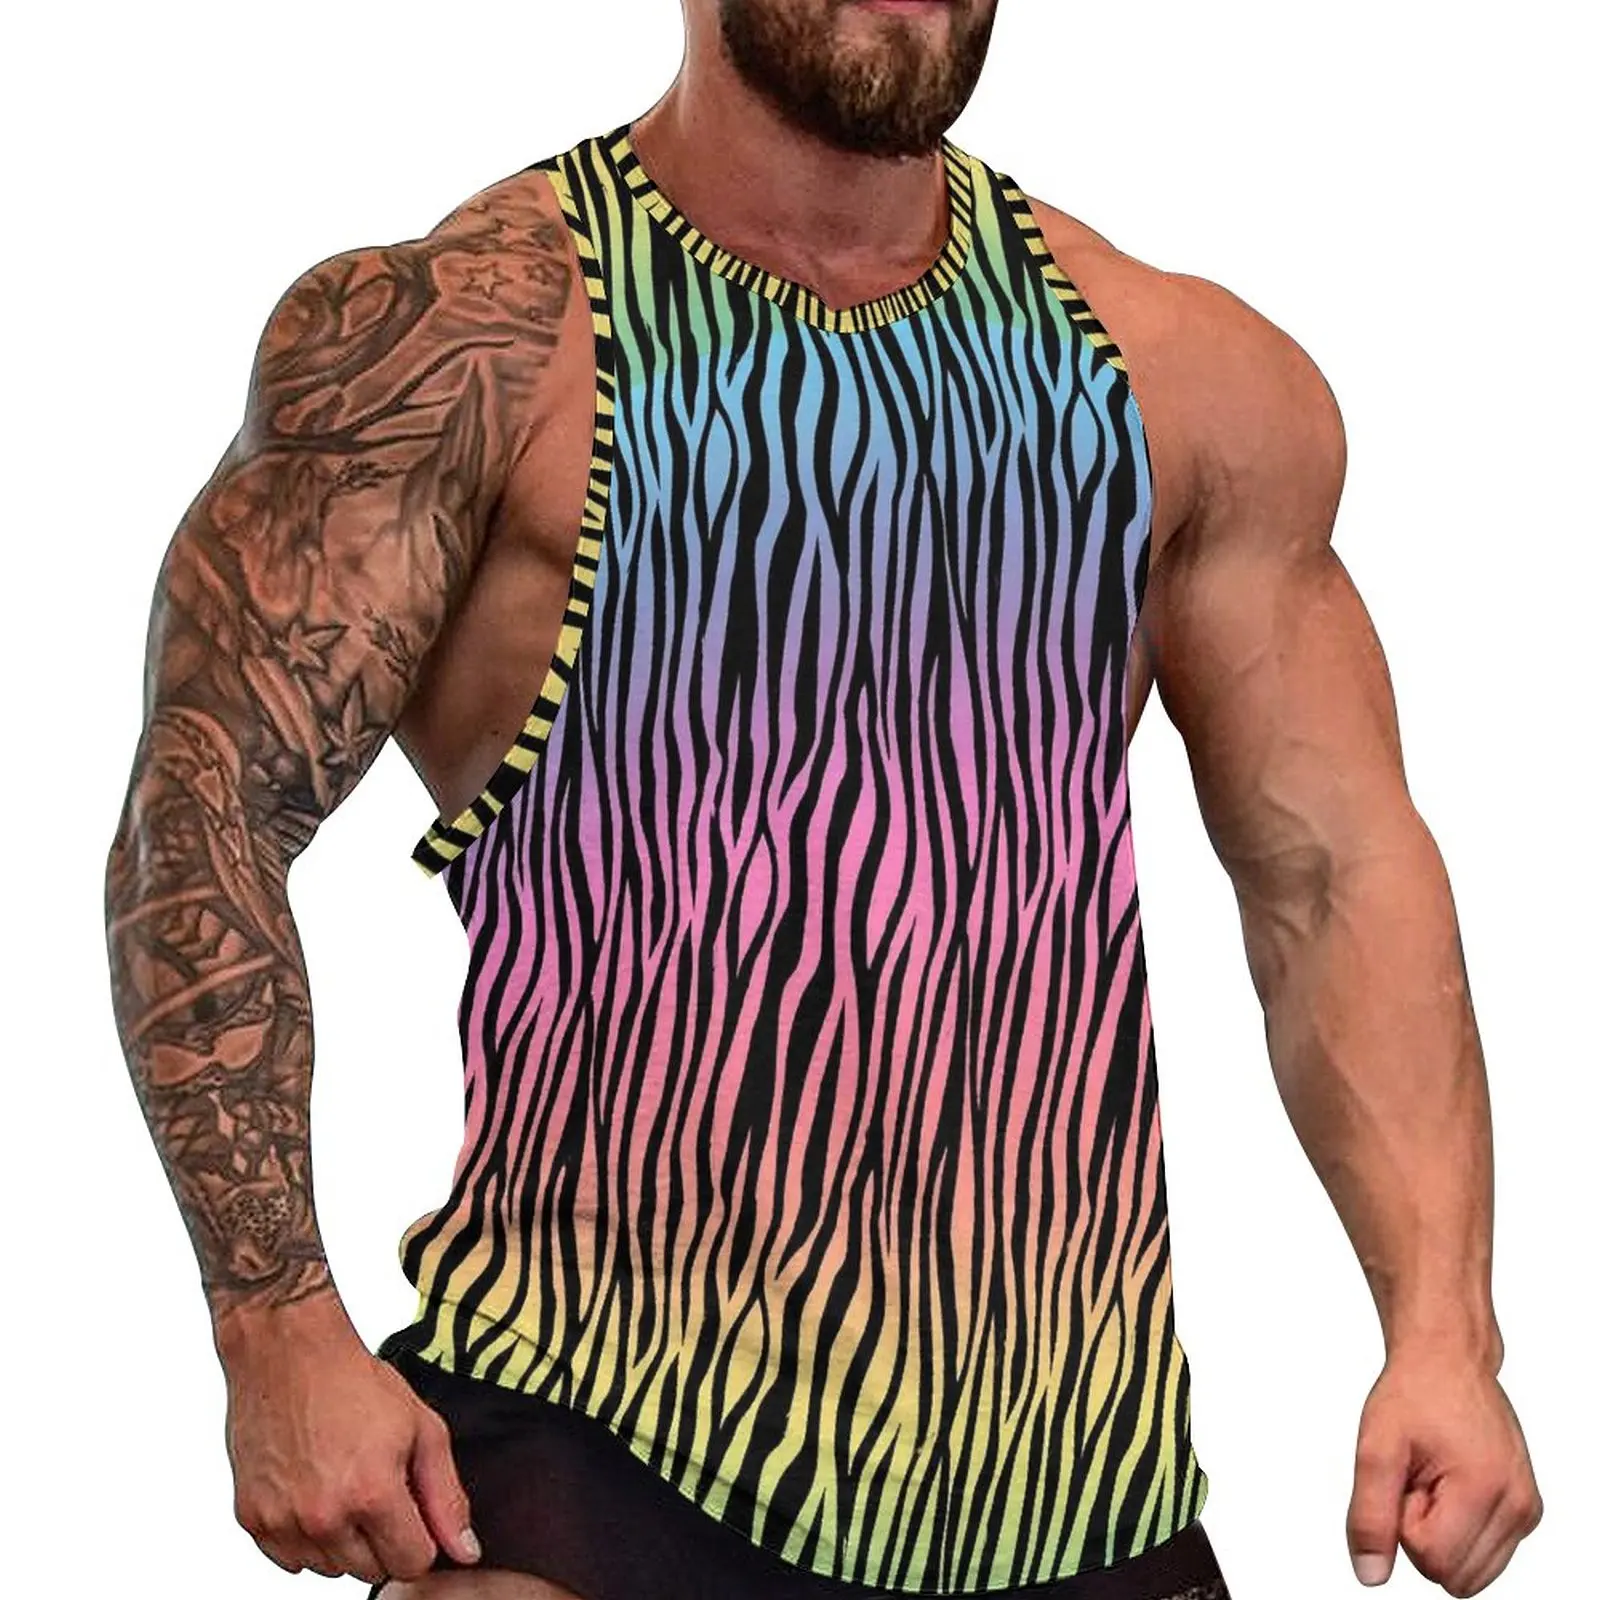 

Tiger Stripes Fur Tank Top Man's Metallic Animal Print Vintage Tops Summer Gym Custom Sleeveless Vests Plus Size